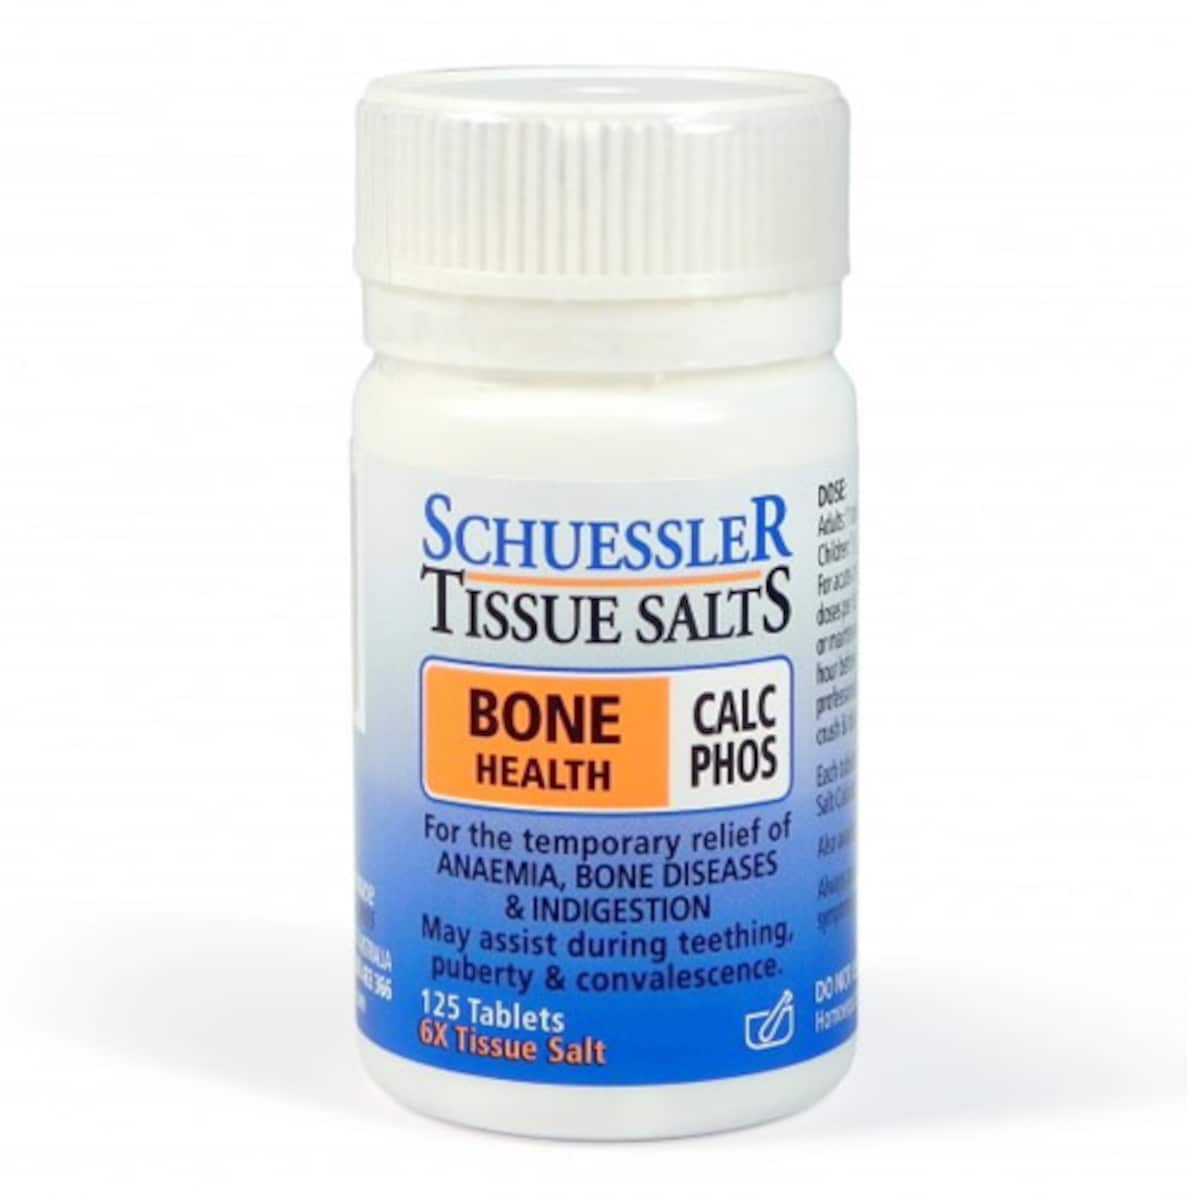 Schuessler Tissue Salts Calc Phos Bone Health 125 Tablets